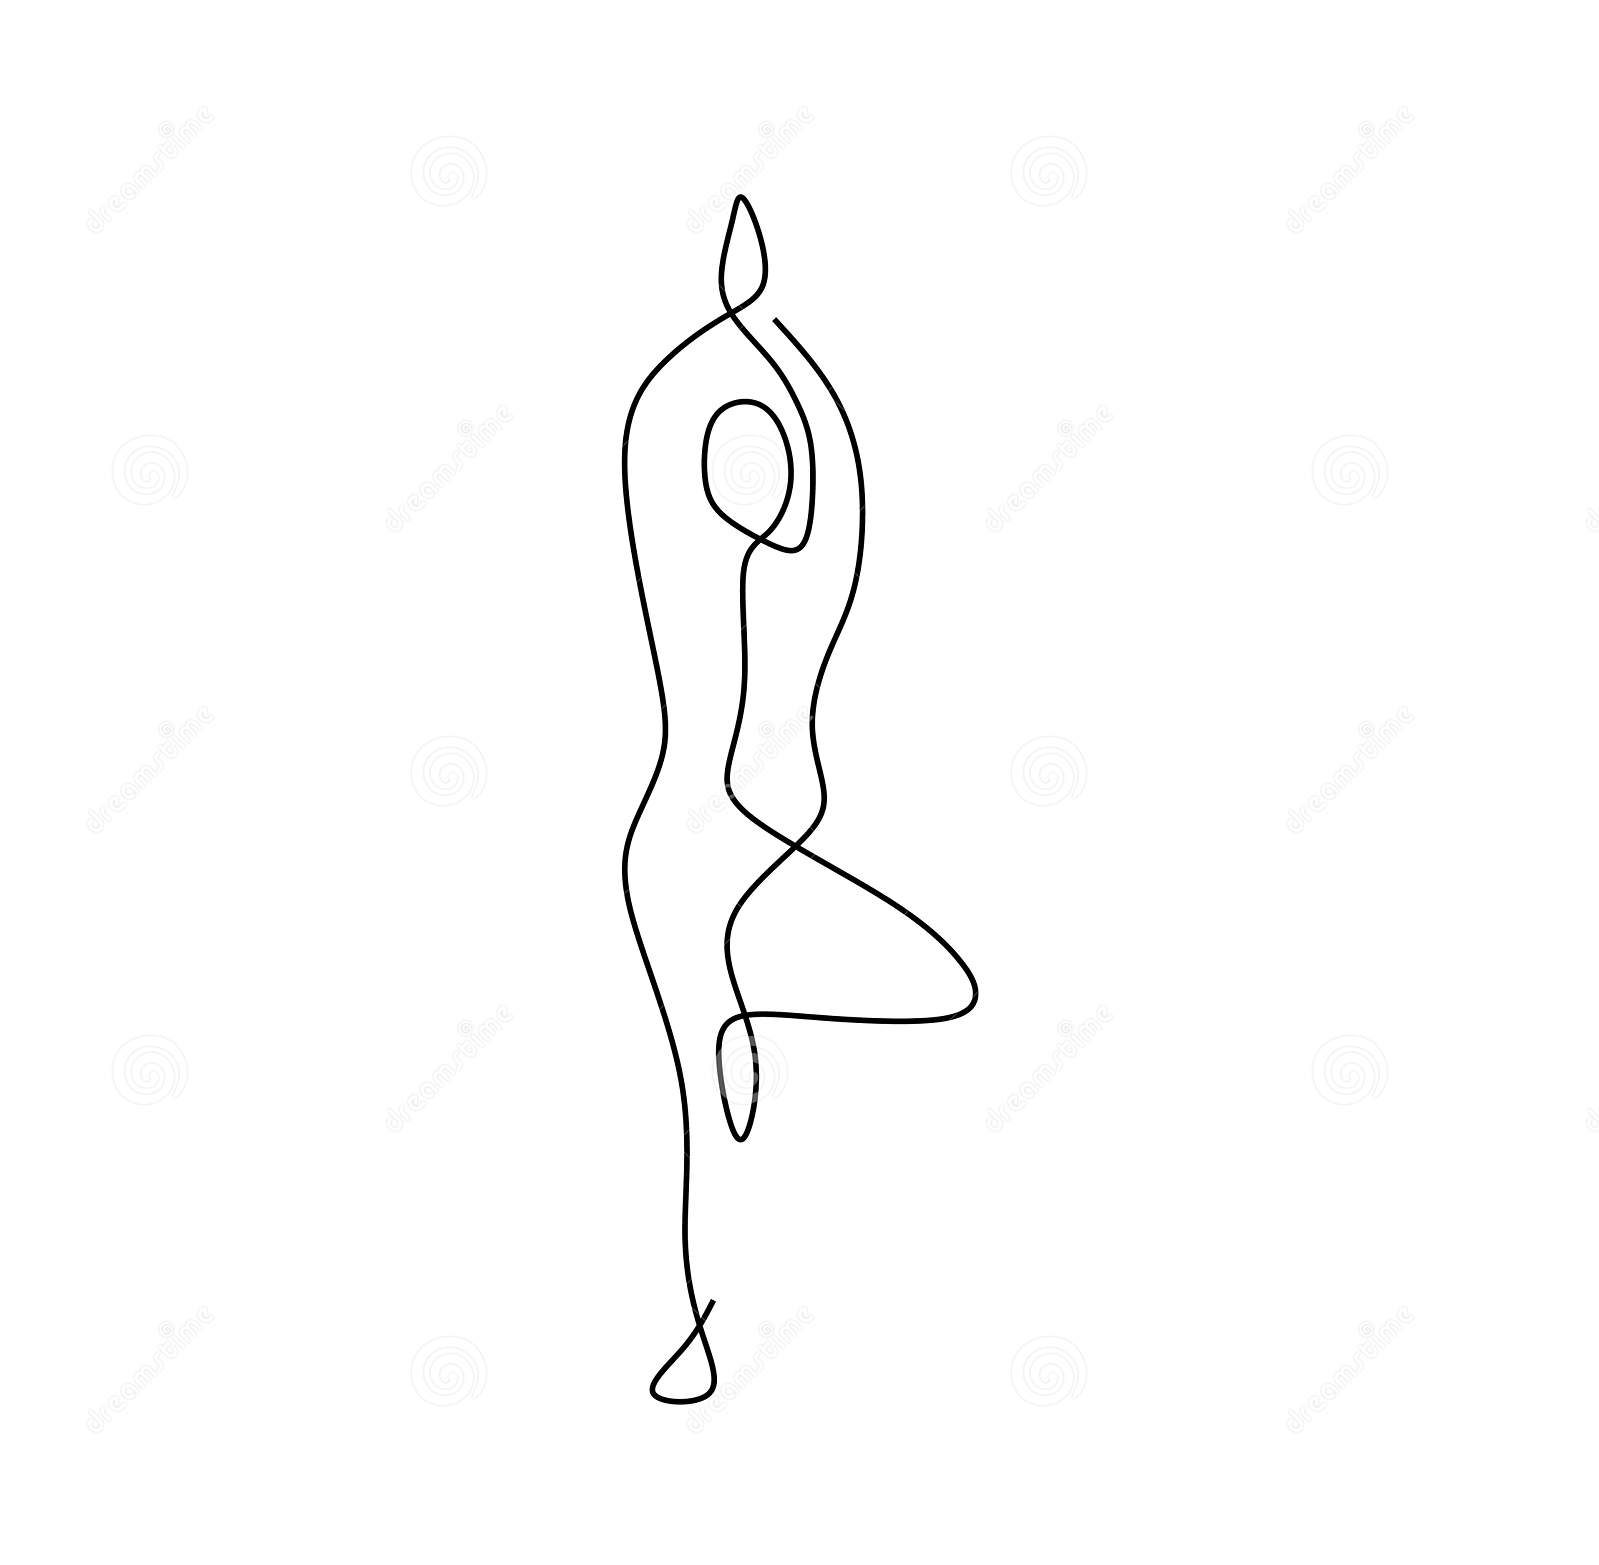 yoga-continuous-one-line-drawing-minimalist-design-minimalism-theme-isolated-white-background-yoga-continuous-one-line-153538702